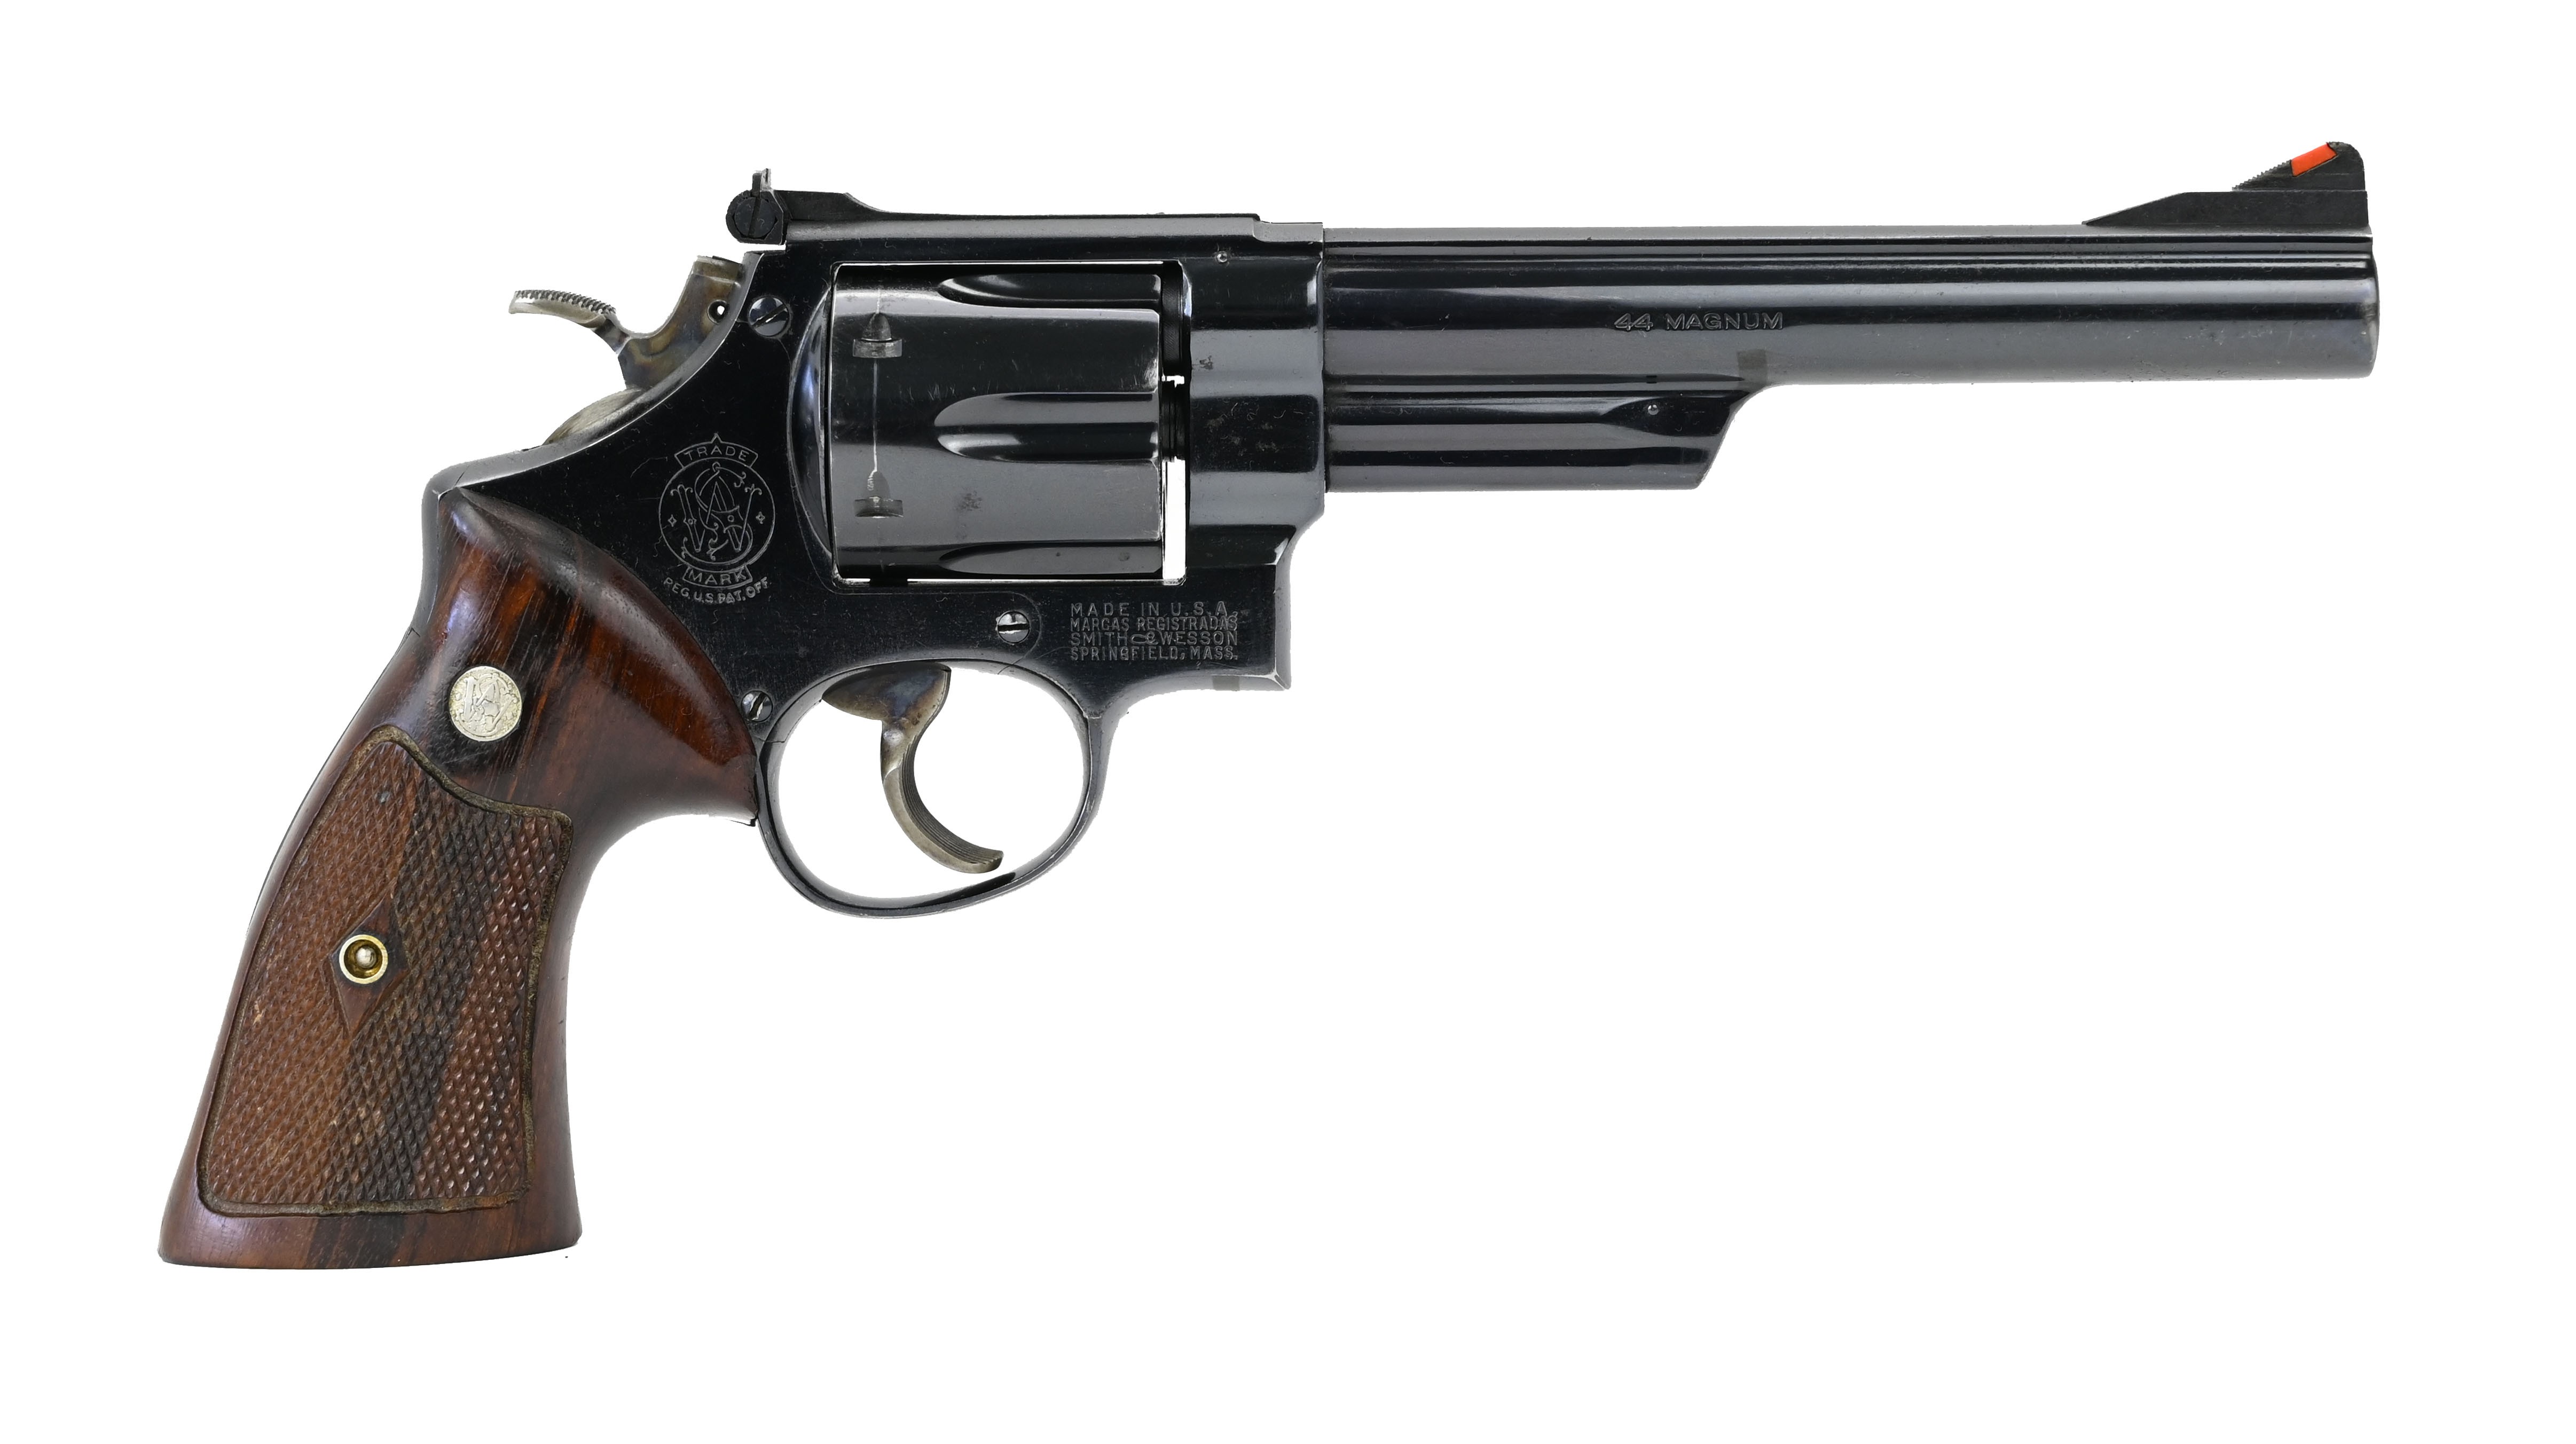 Smith & Wesson .44 Magnum .44 Magnum caliber revolver for sale.